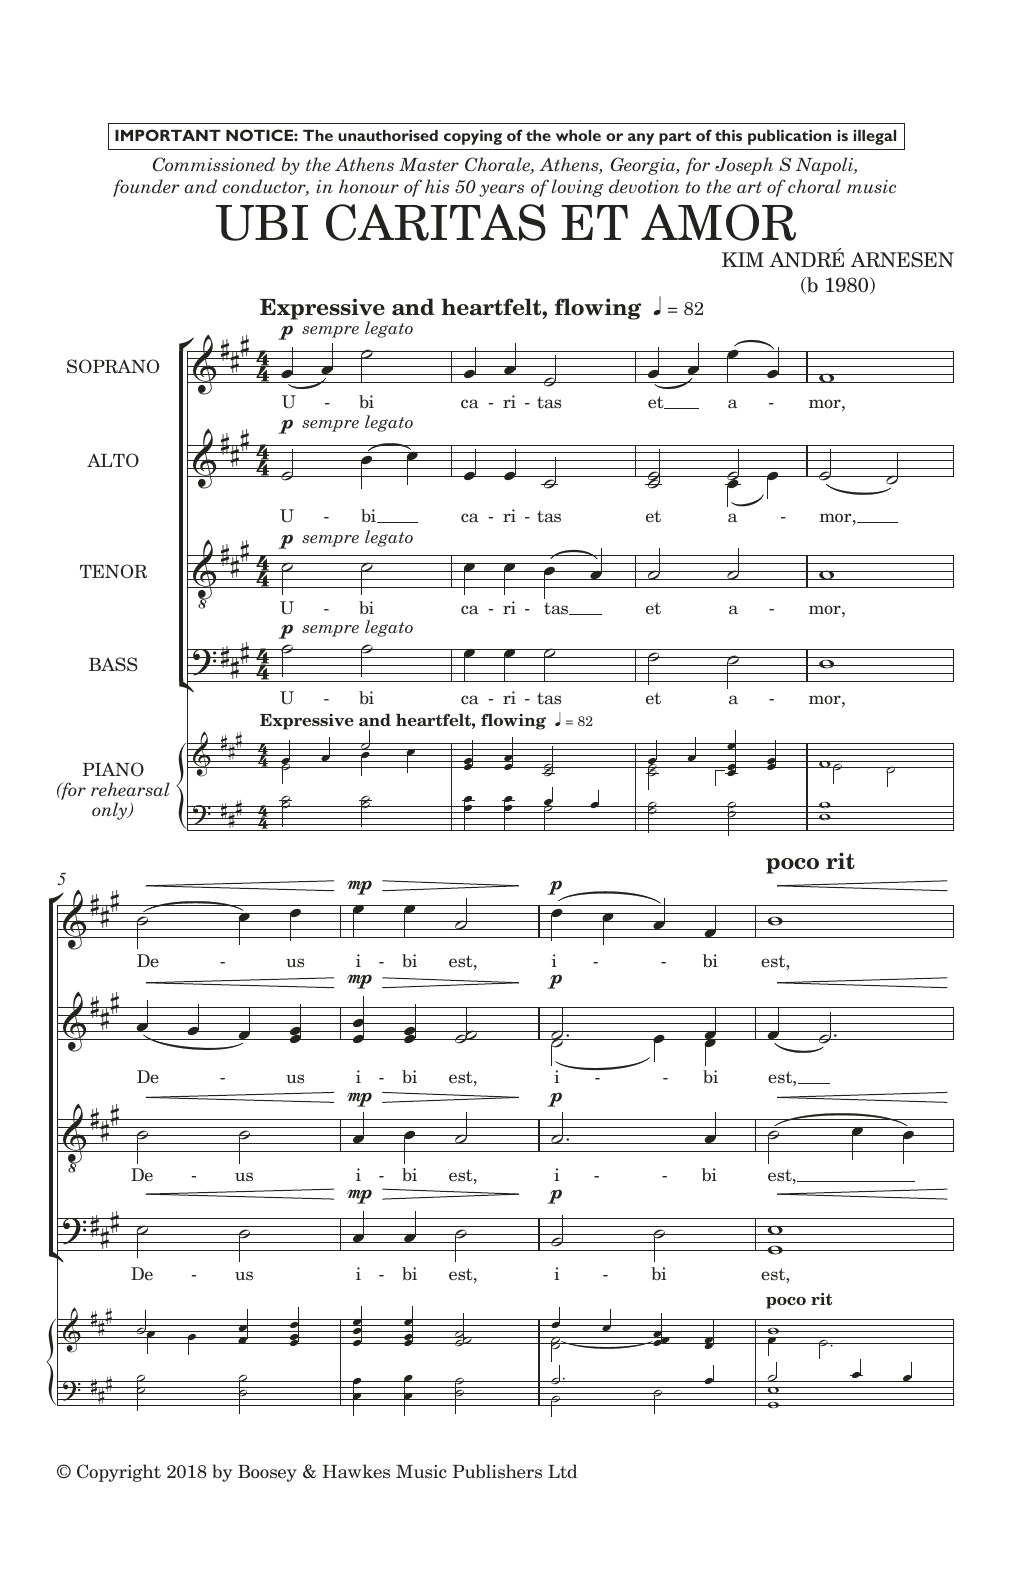 Kim Andre Arnesen Ubi Caritas Et Amor Sheet Music Notes & Chords for SATB Choir - Download or Print PDF